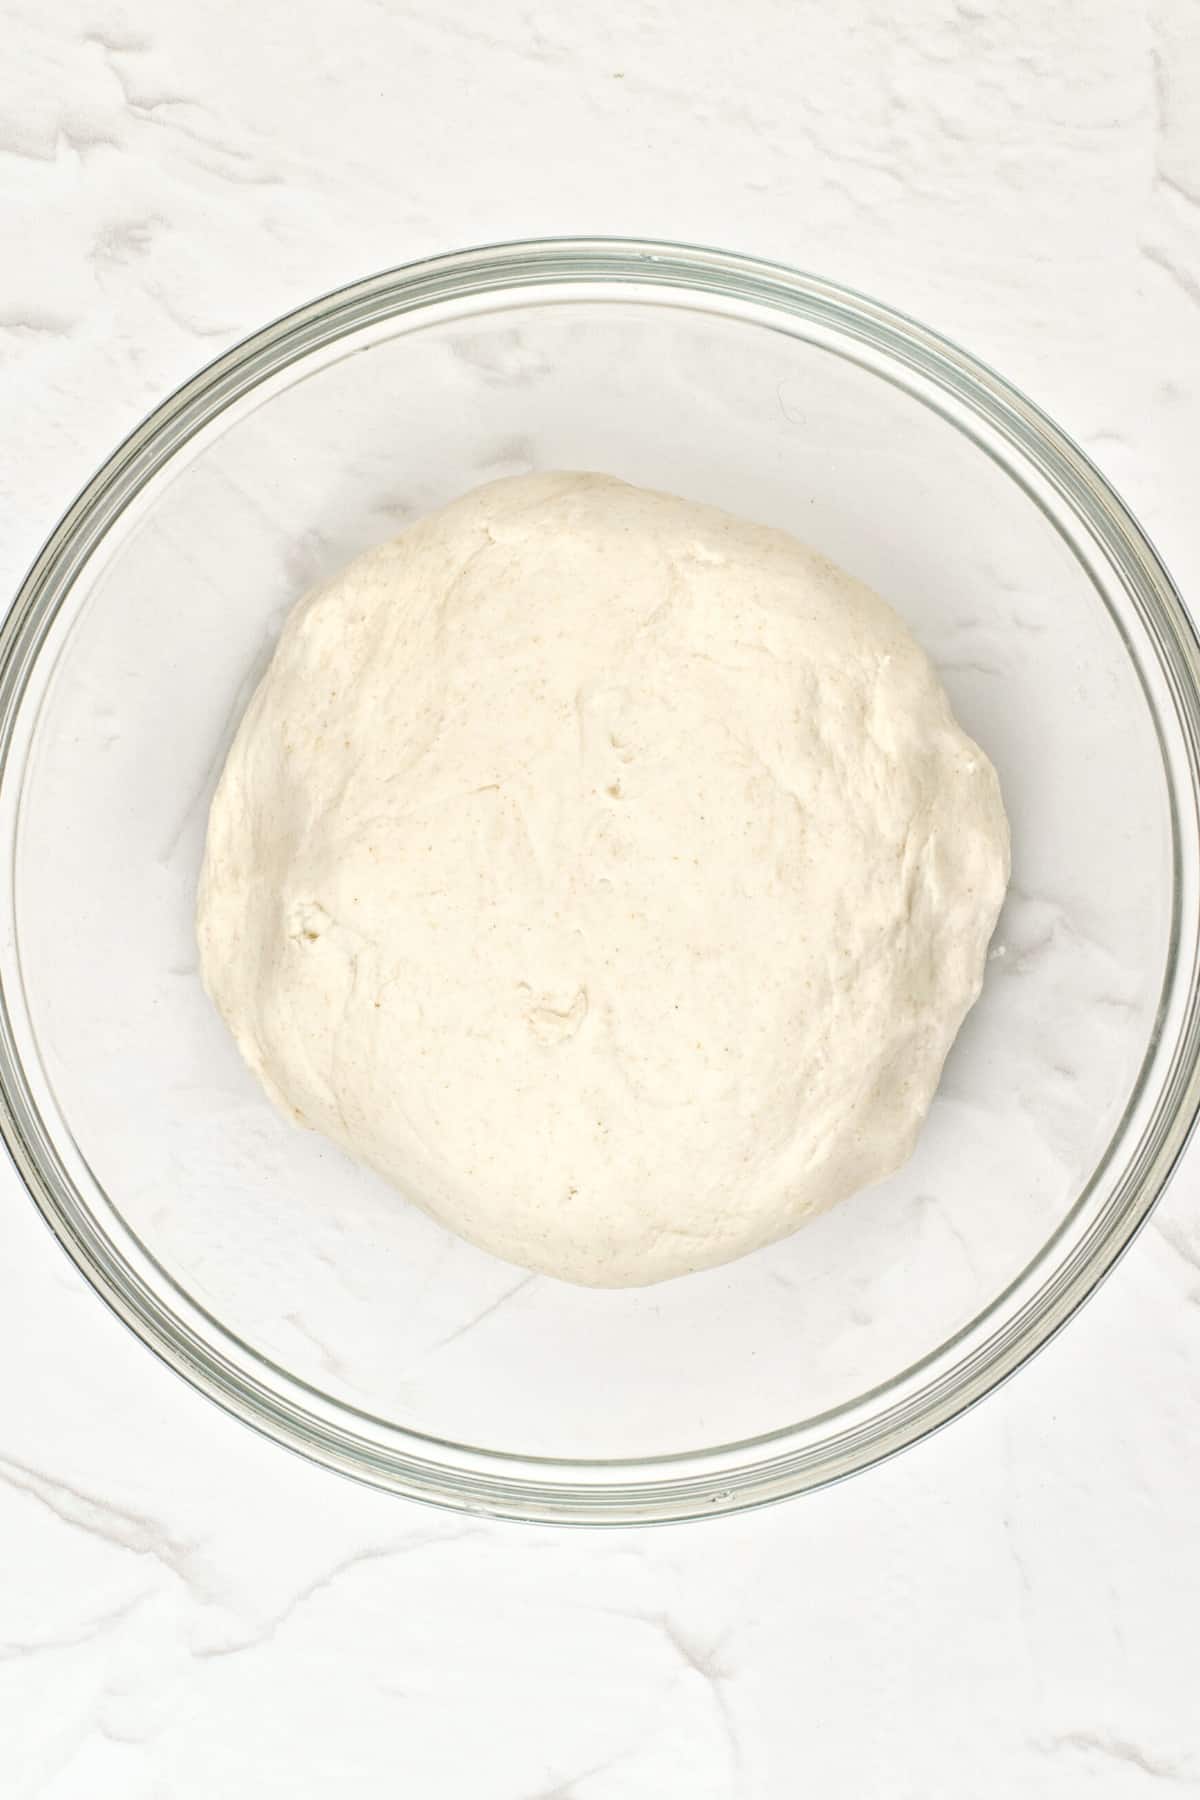 Gluten-free pita dough in glass bowl.